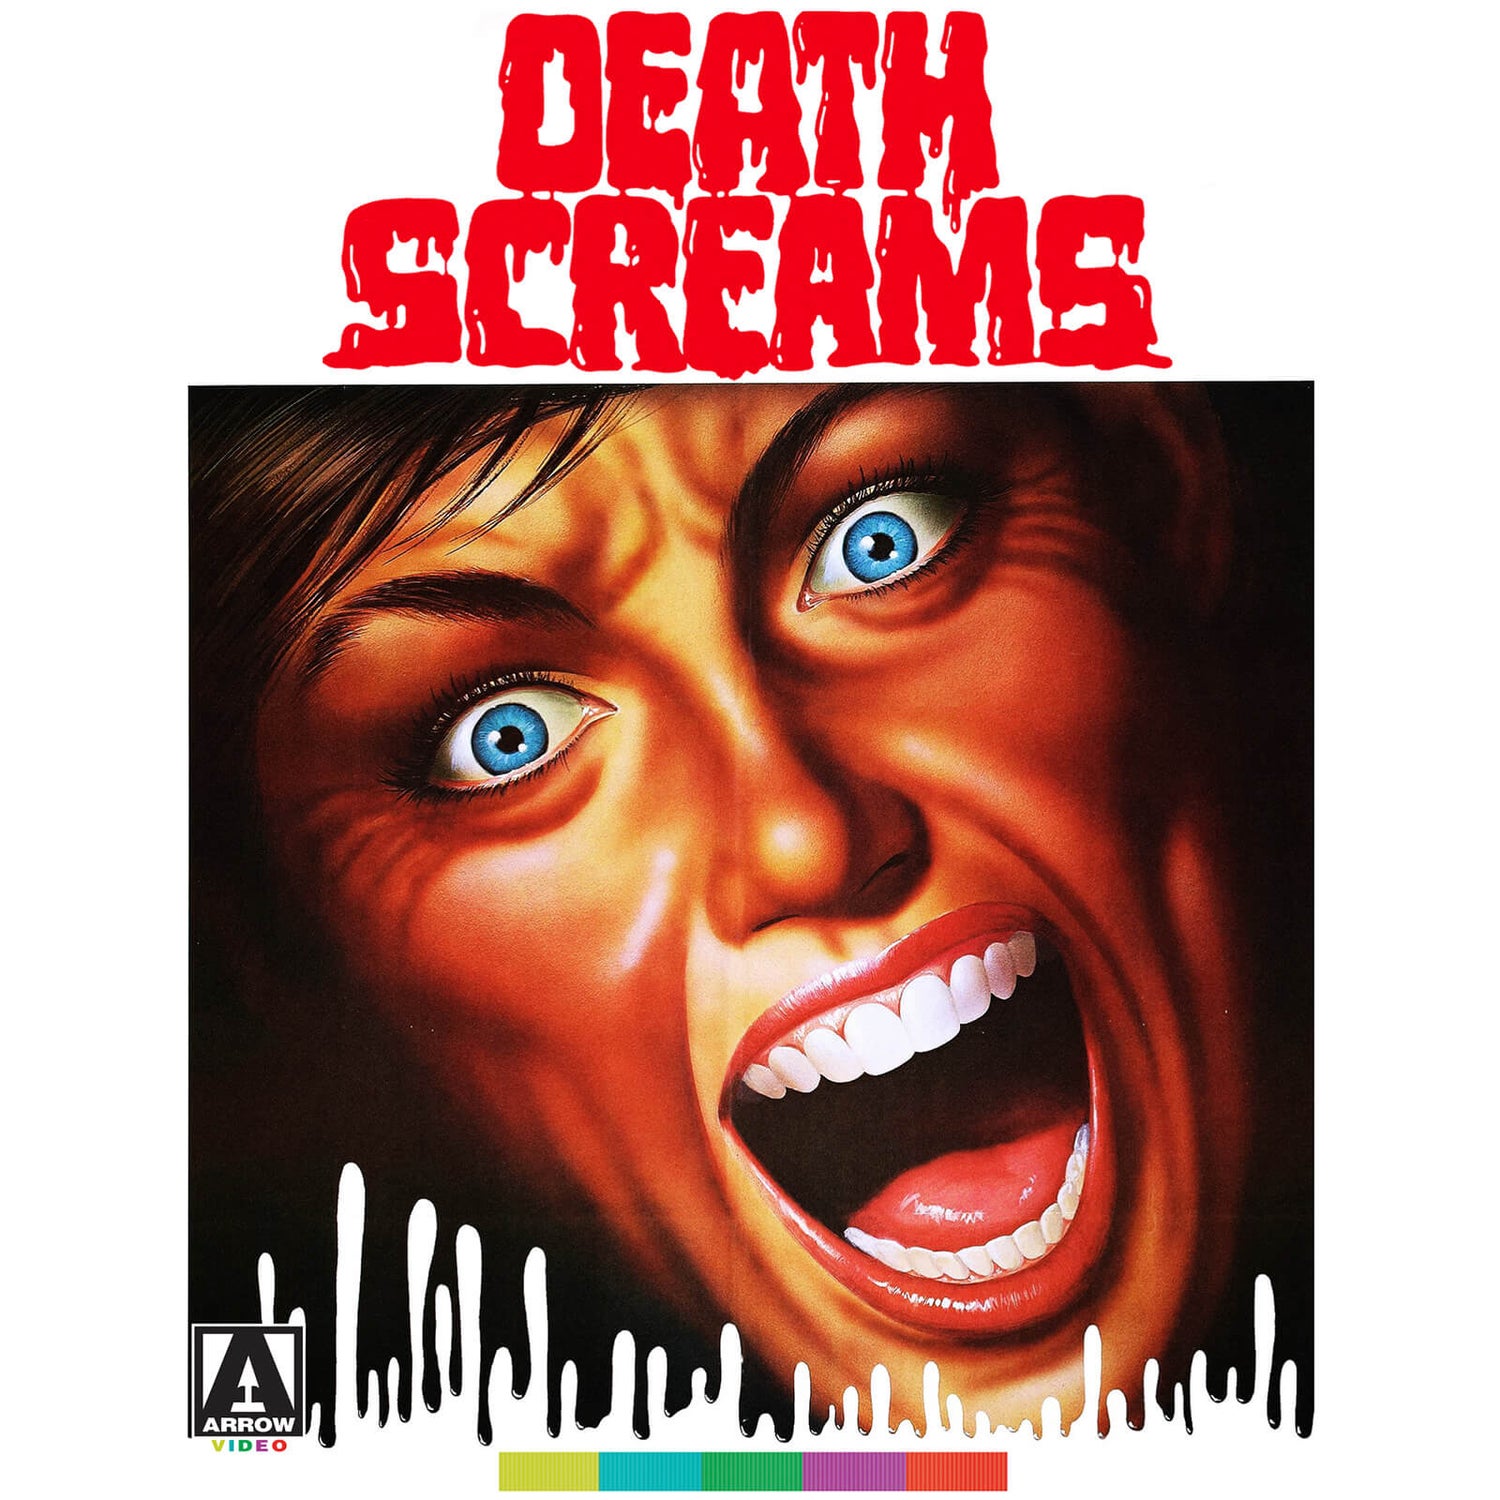 Death Screams - Limited Edition (Original Theatrical Artwork O-Card)